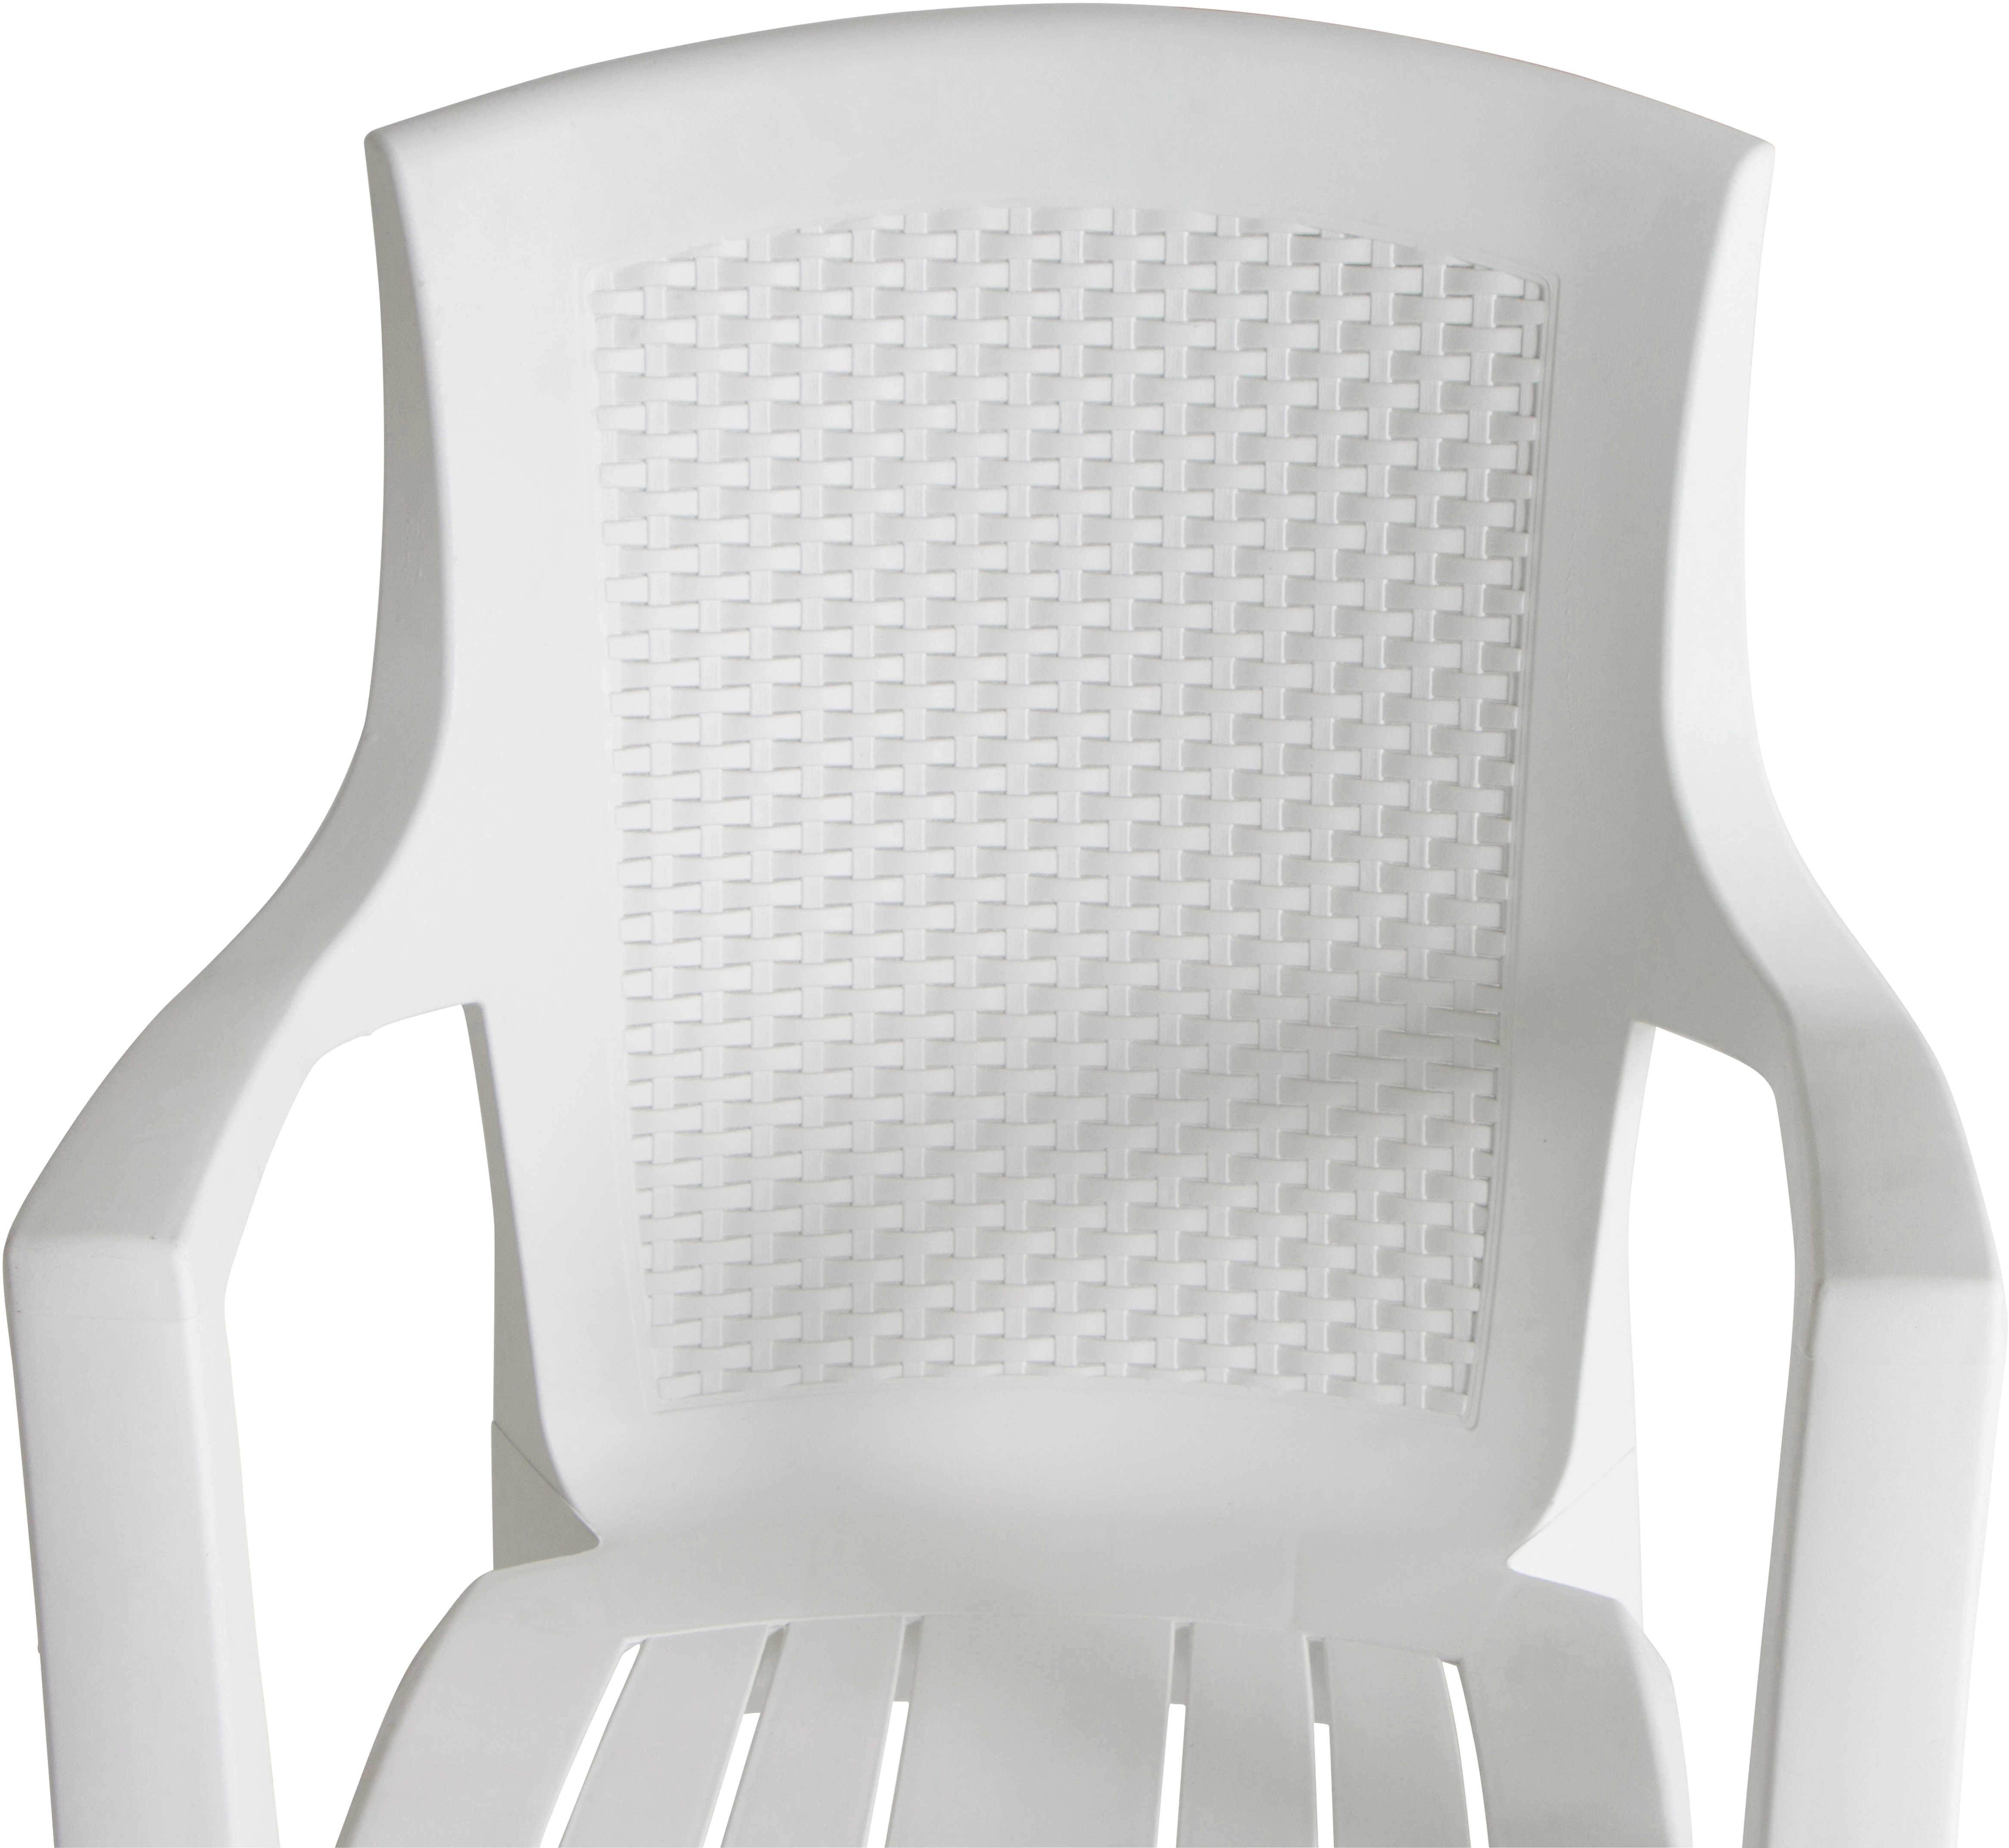 Progarden Stapelsessel Eden Weiß 62 cm x 60 cm x 89 cm kaufen bei OBI | Sessel